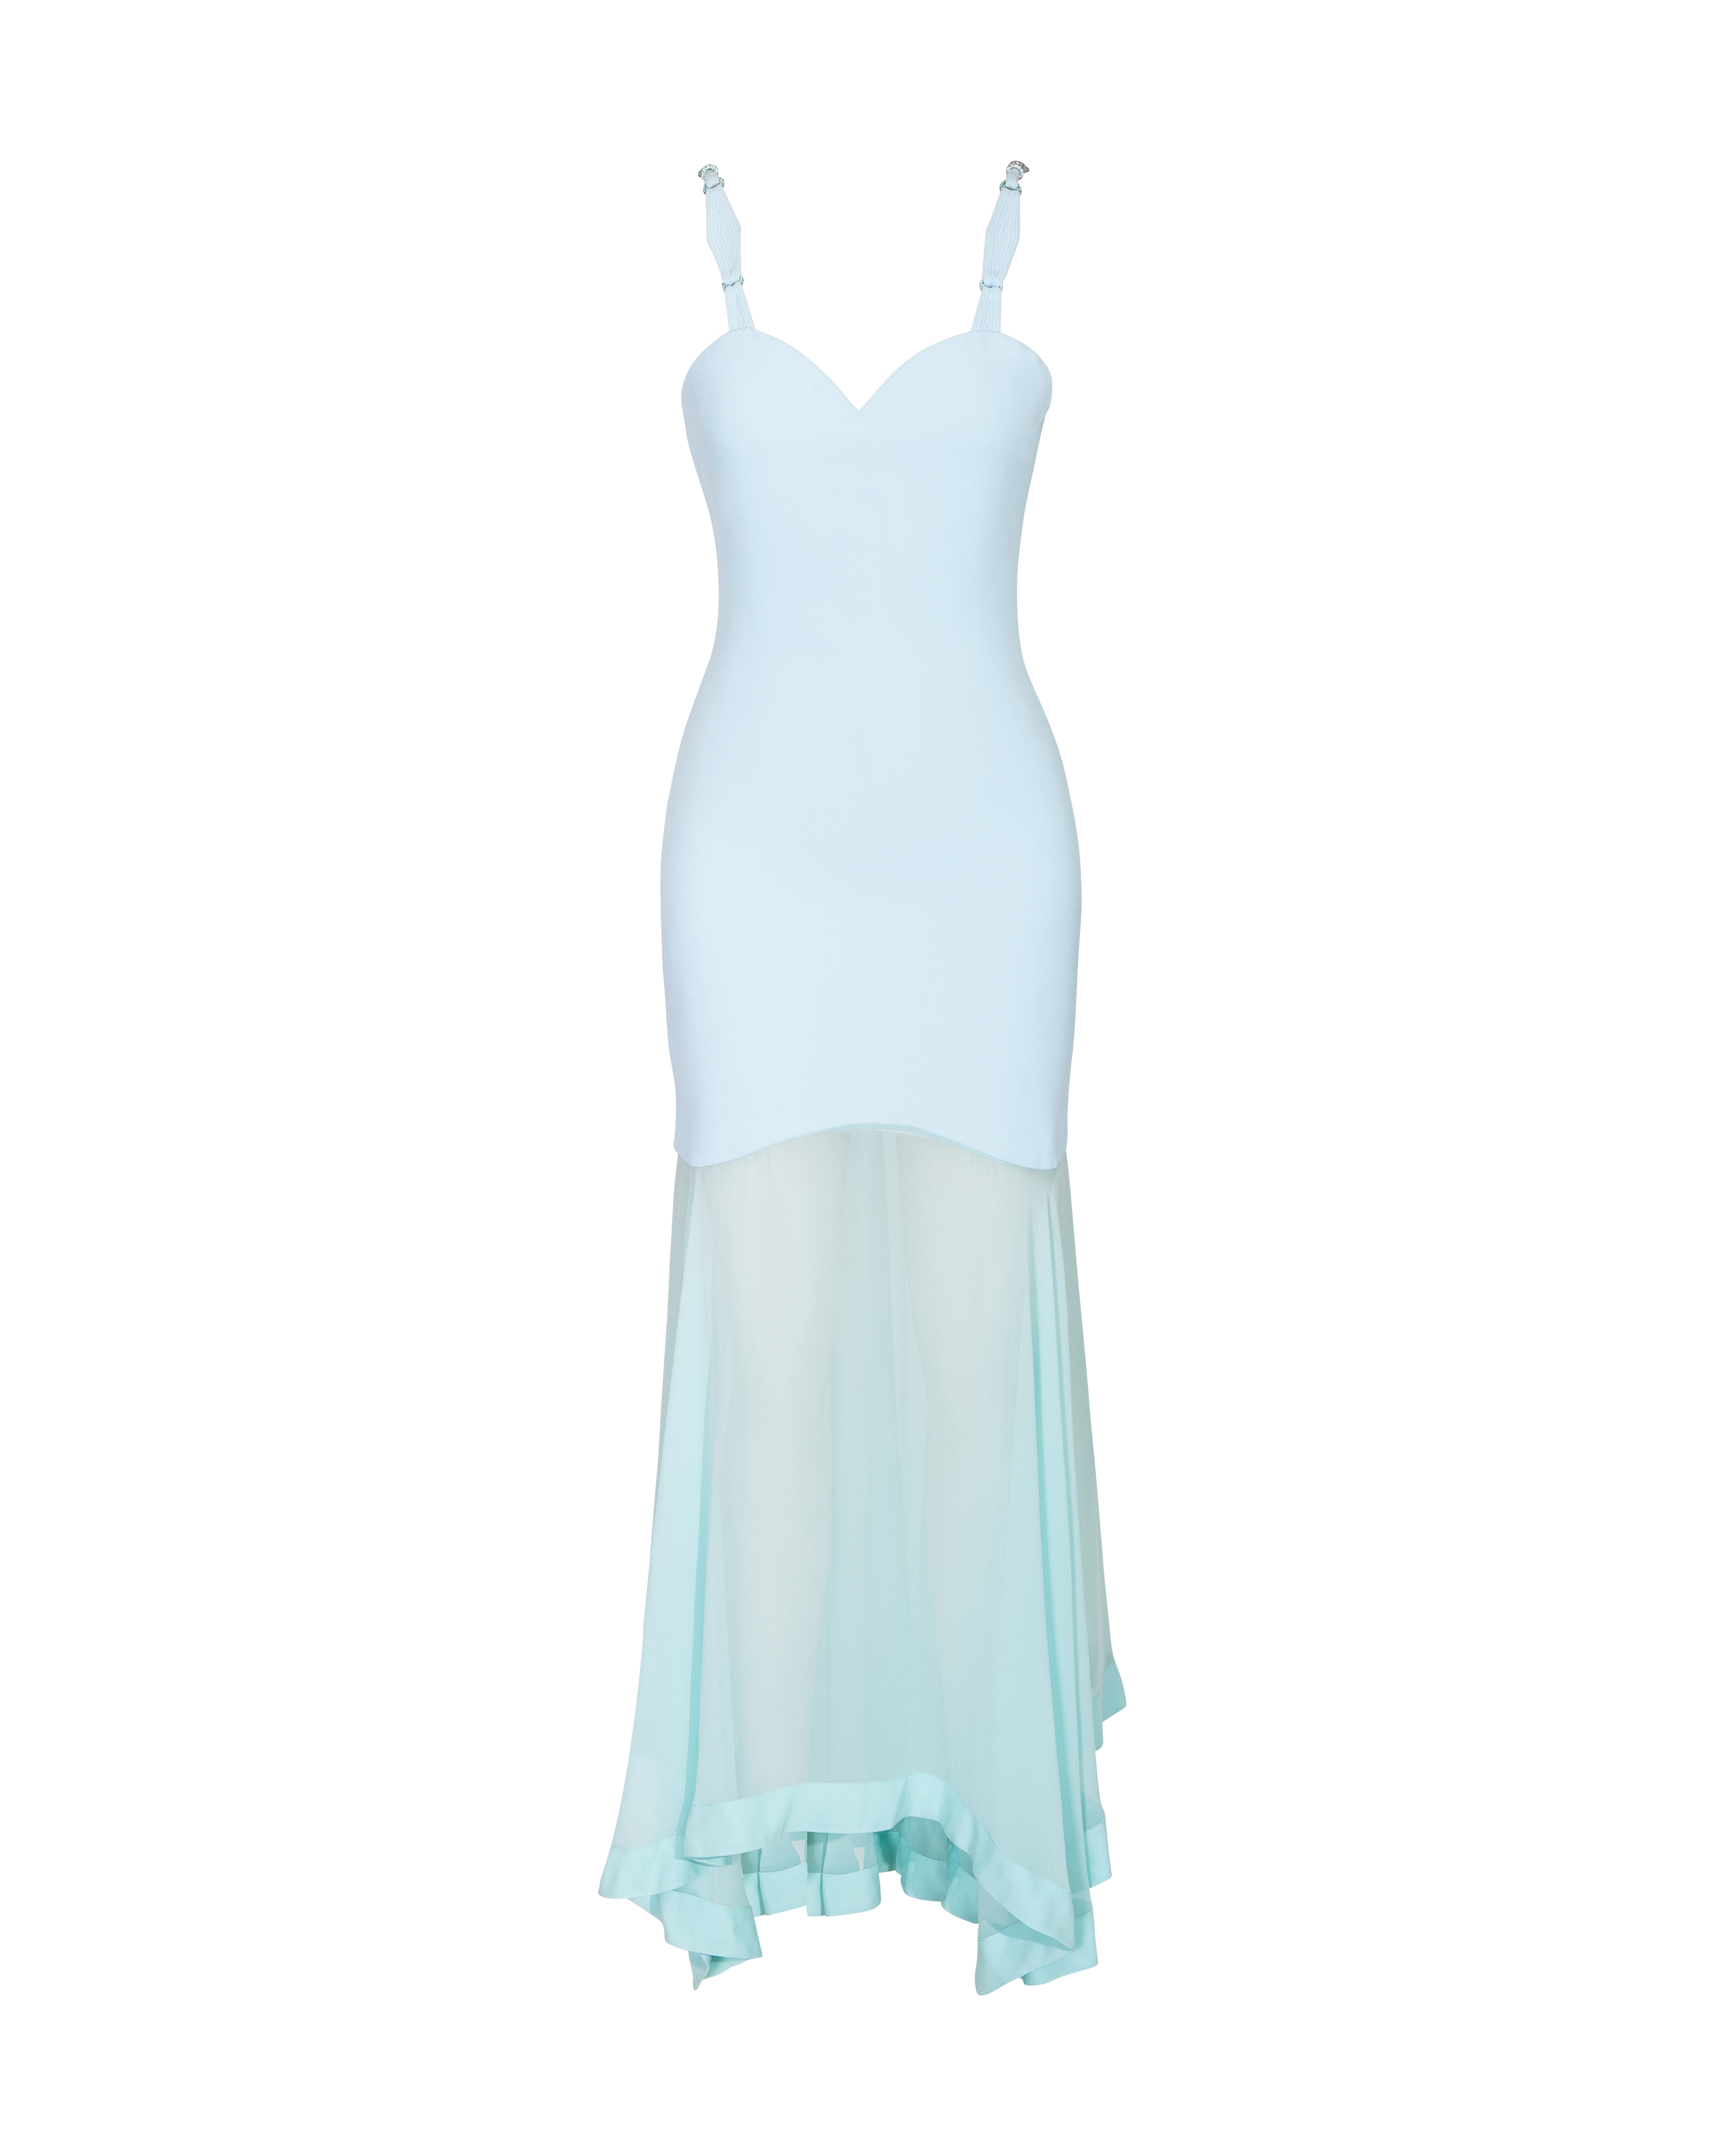 S/S 1995 Sky Blue Bustier Gown